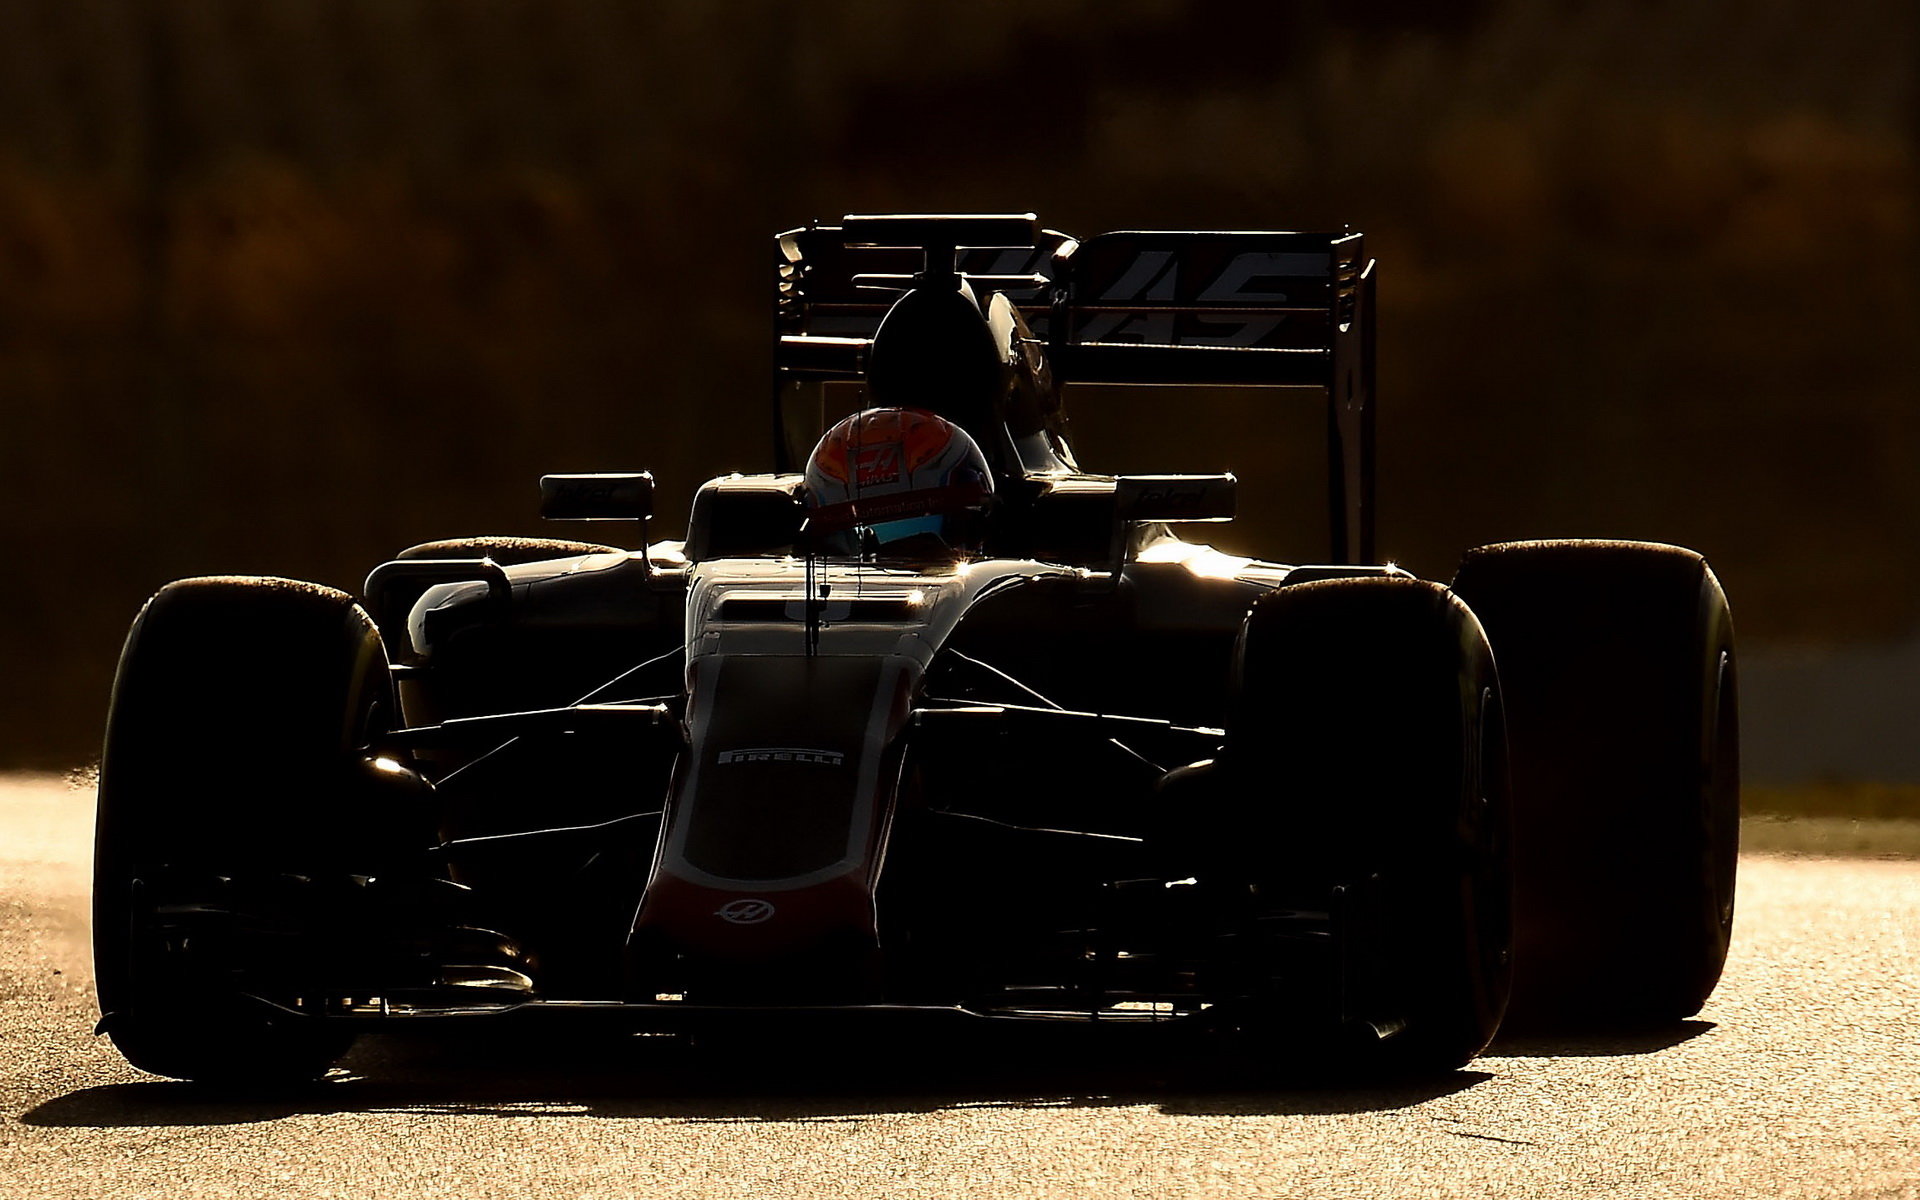 Romain Grosjean s novým vozem Haas VF-16